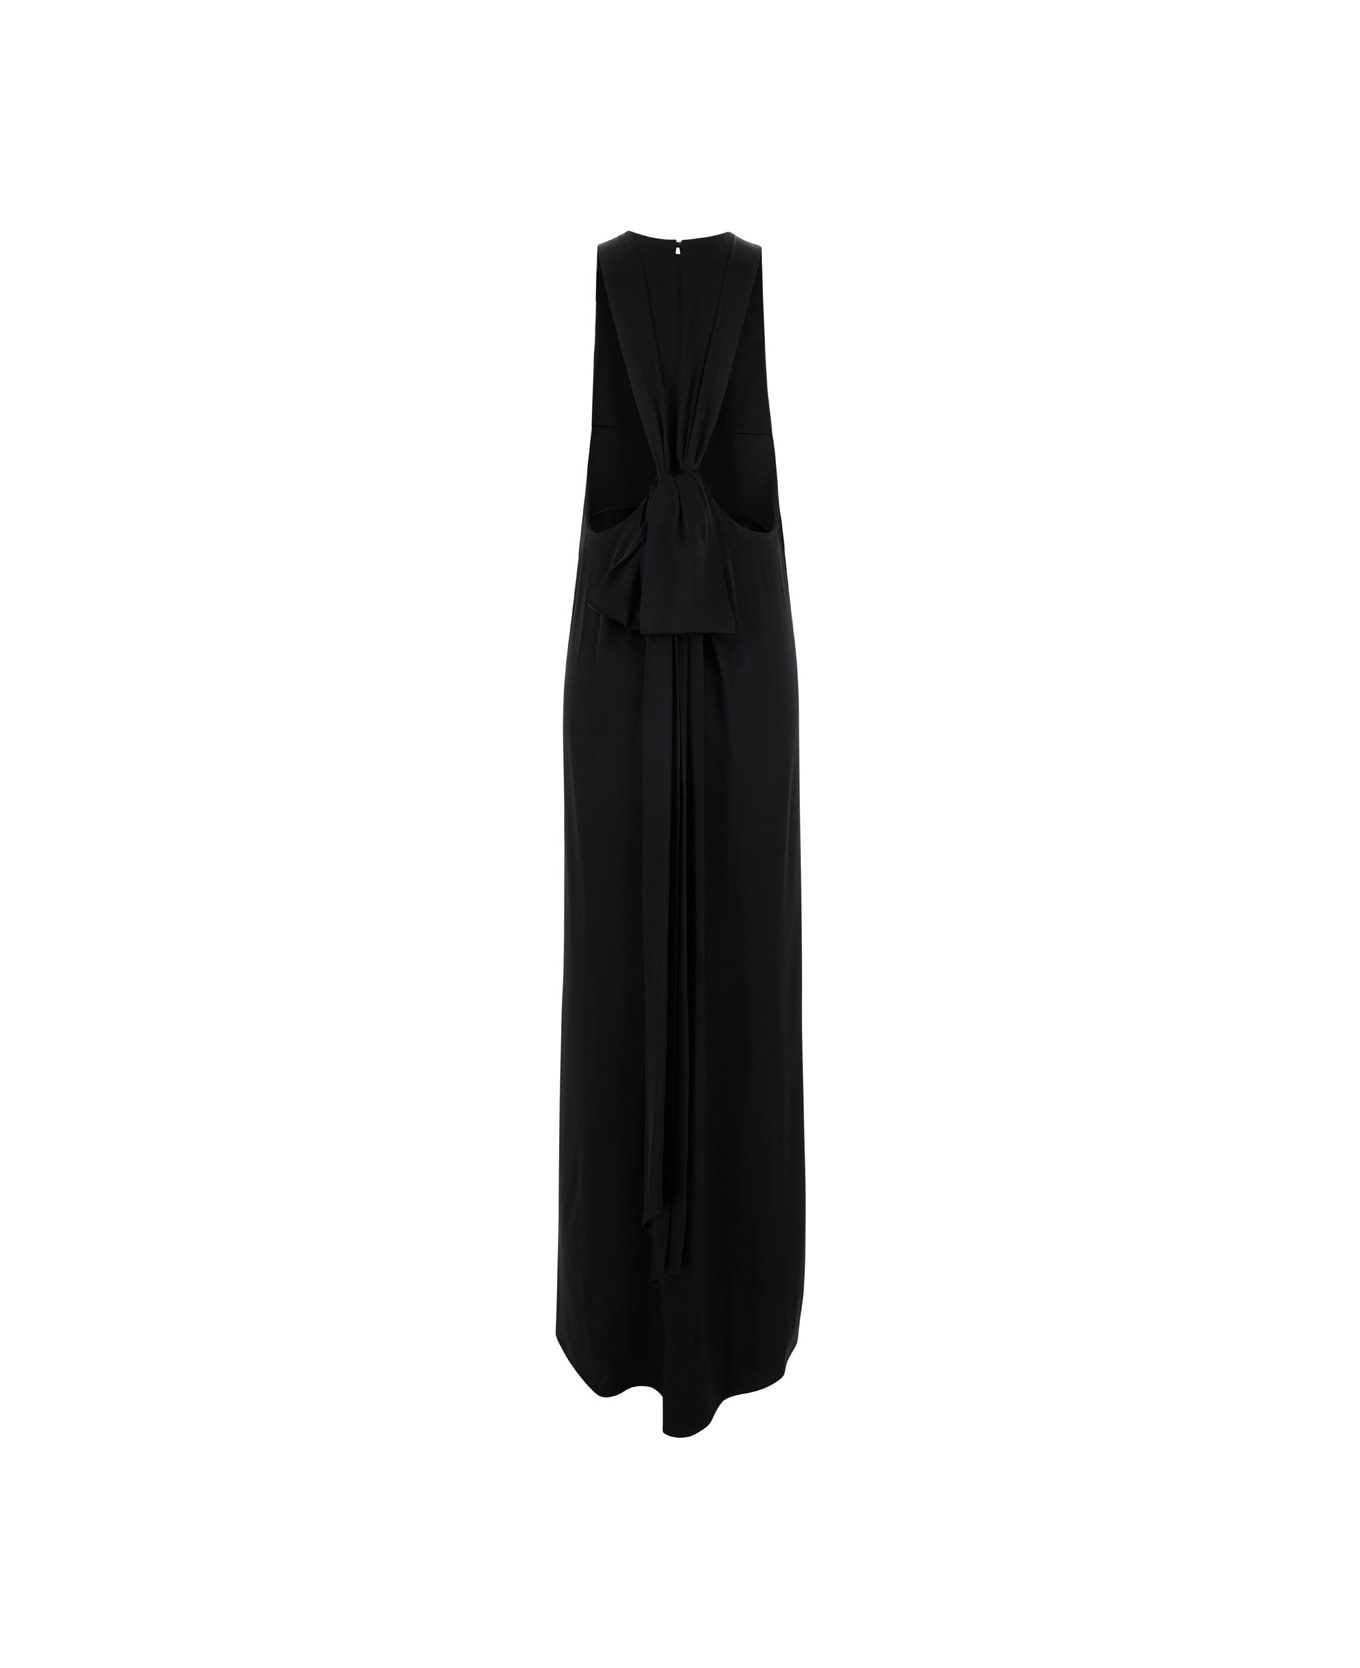 Saint Laurent Black Back-tie Dress In Satin Crepe Woman - Black